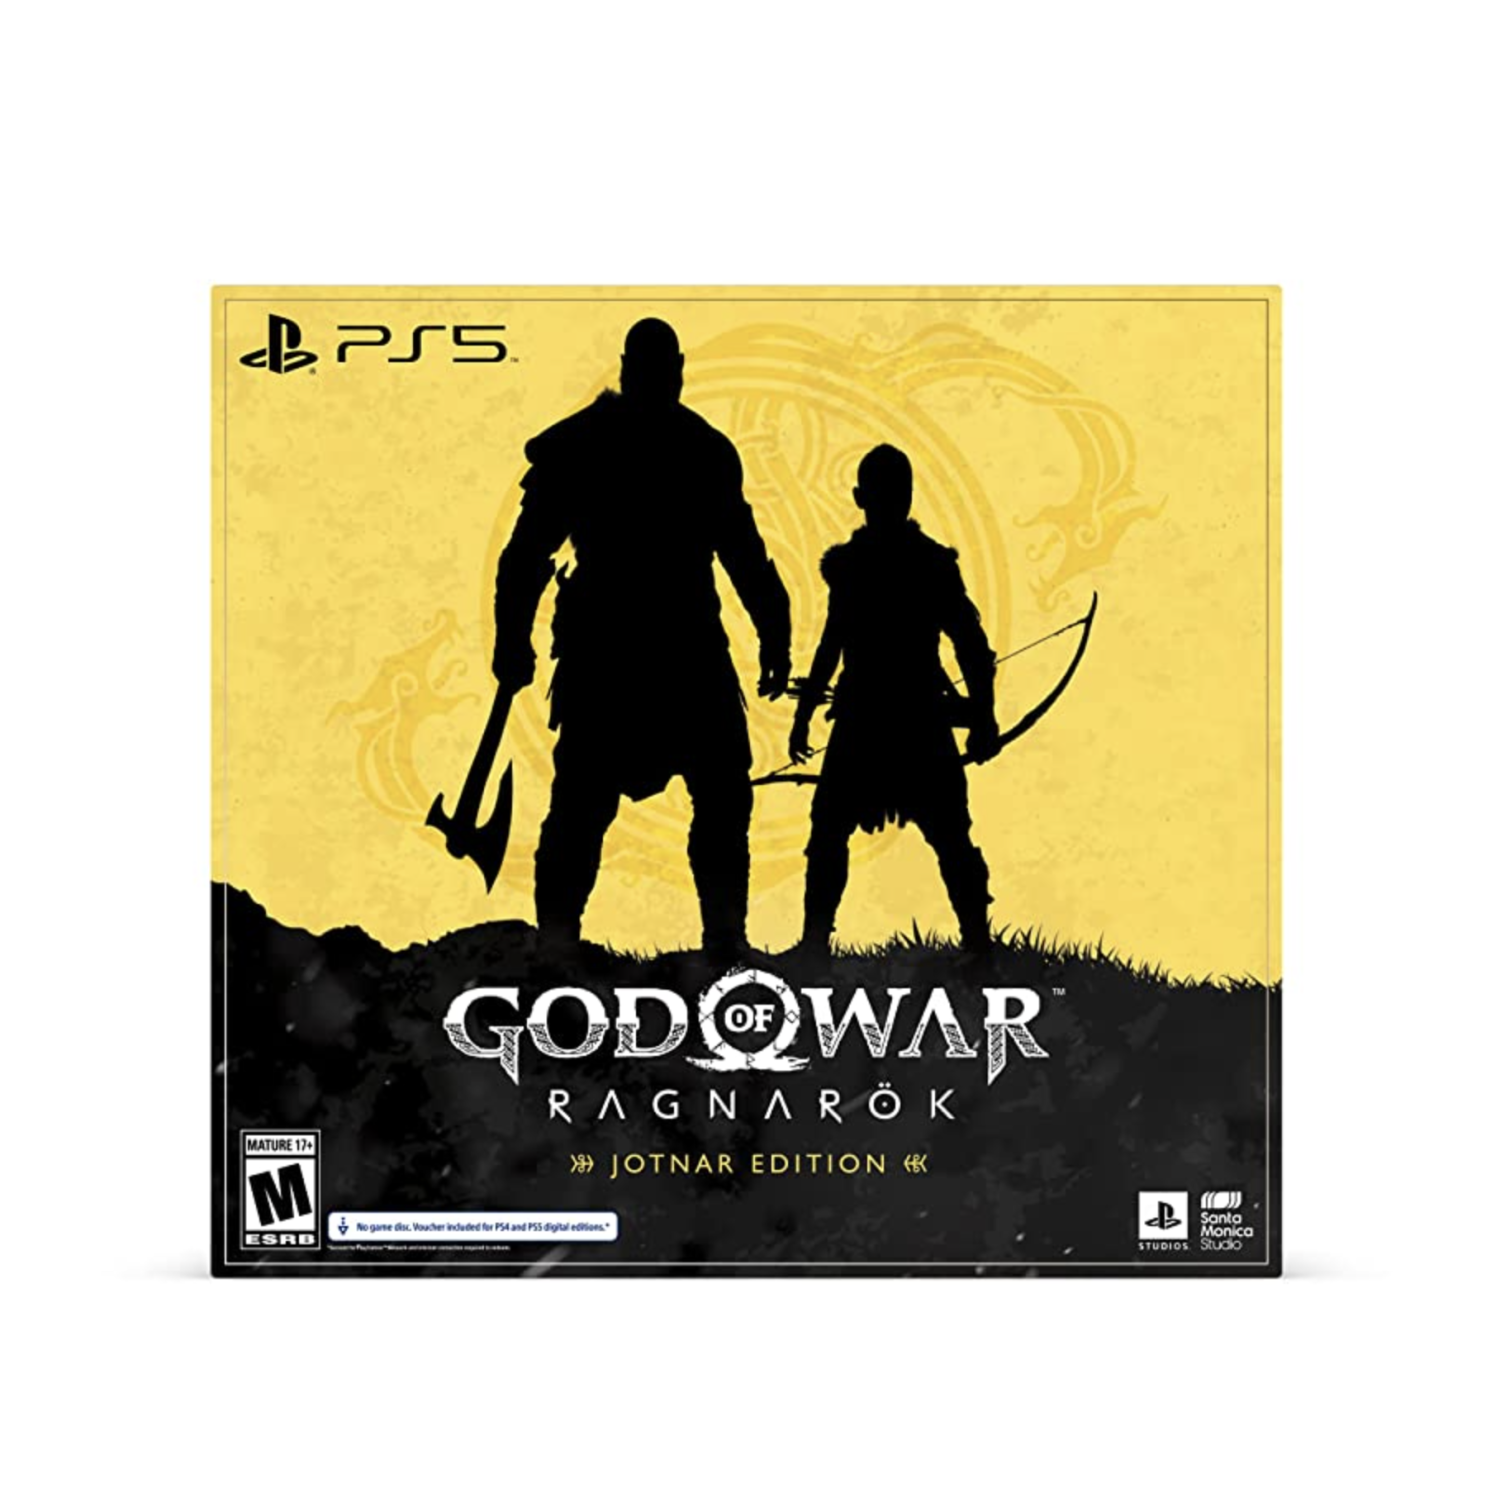 God of War Ragnarök Jötnar Edition - PS4 and PS5 Entitlements